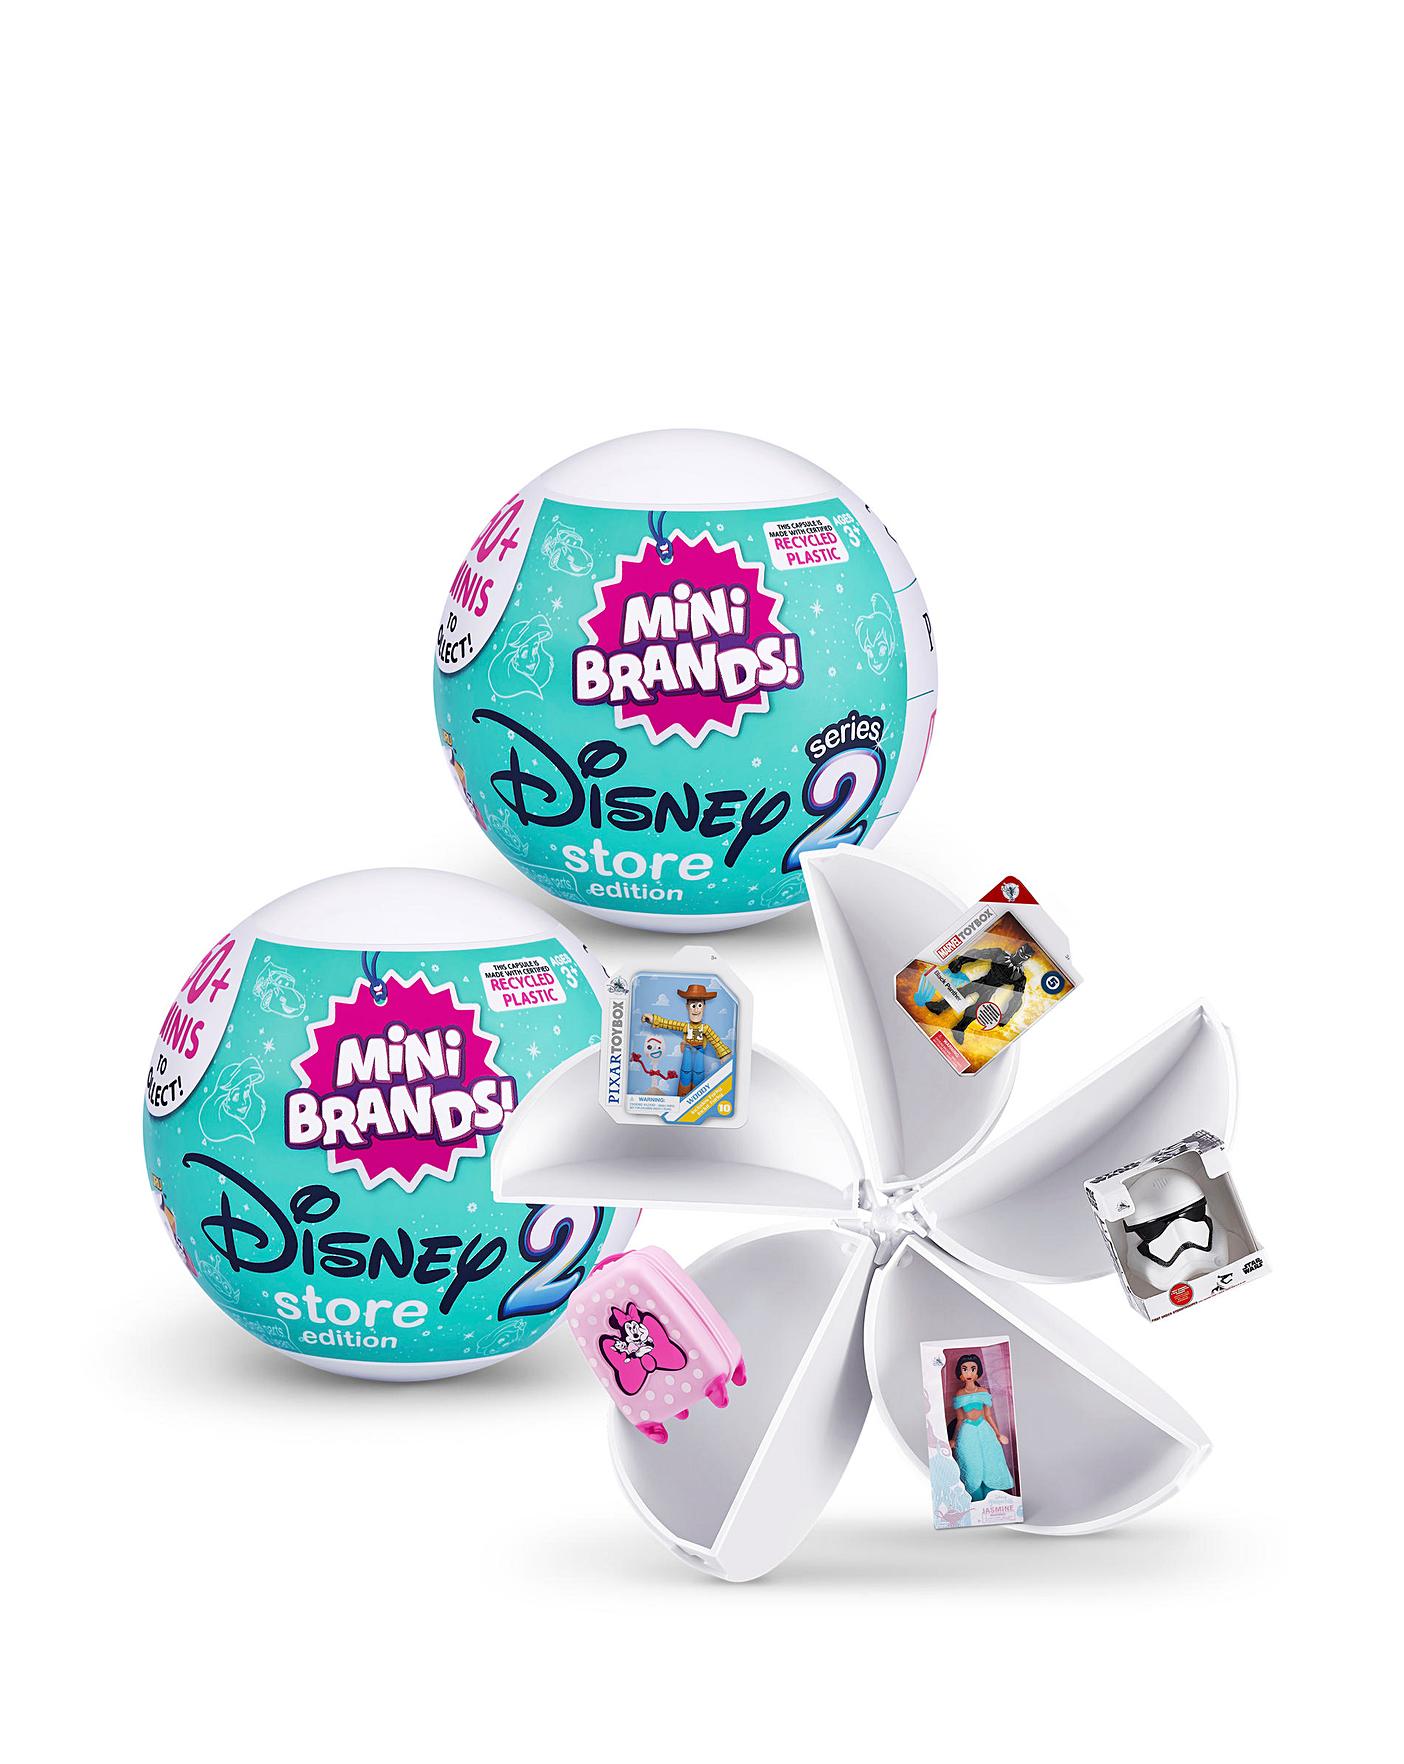 ZURU 5 SURPRISE - Disney Edition Mini Brands SERIES 2 *Pick the One You  Want*